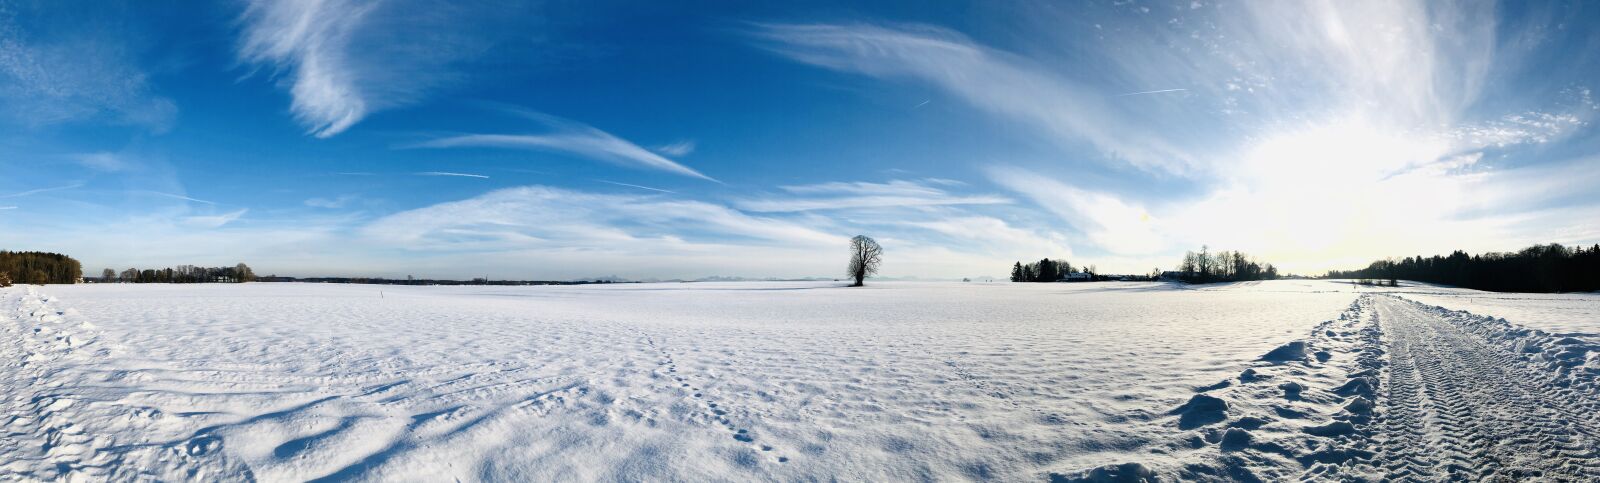 Apple iPhone X sample photo. Winter, snow, nature photography